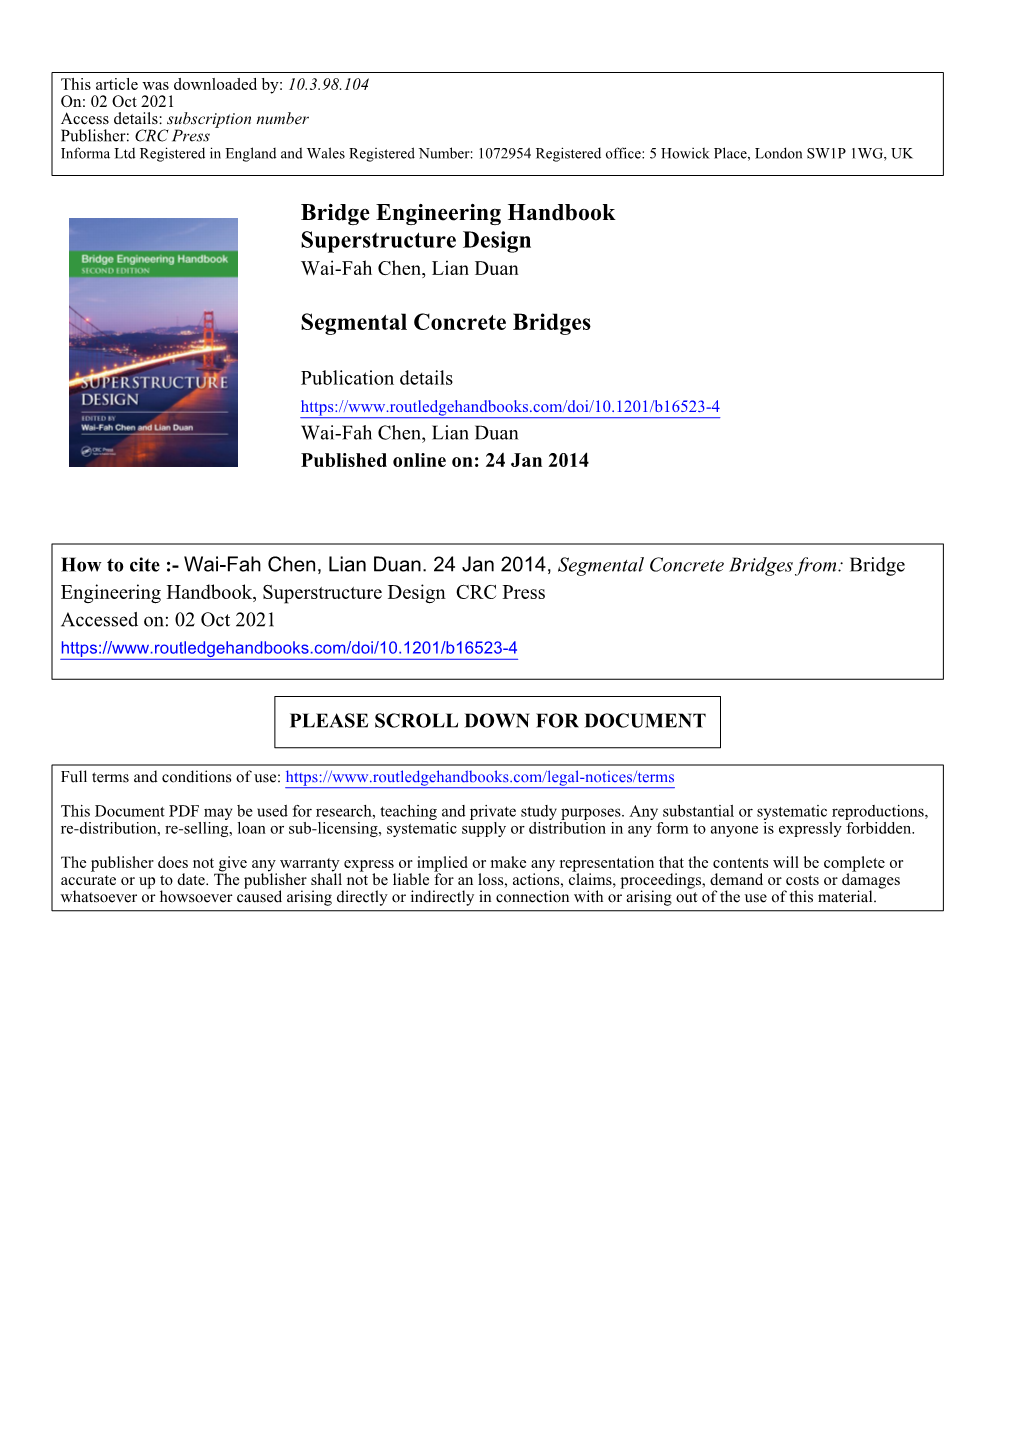 Bridge Engineering Handbook Superstructure Design Segmental